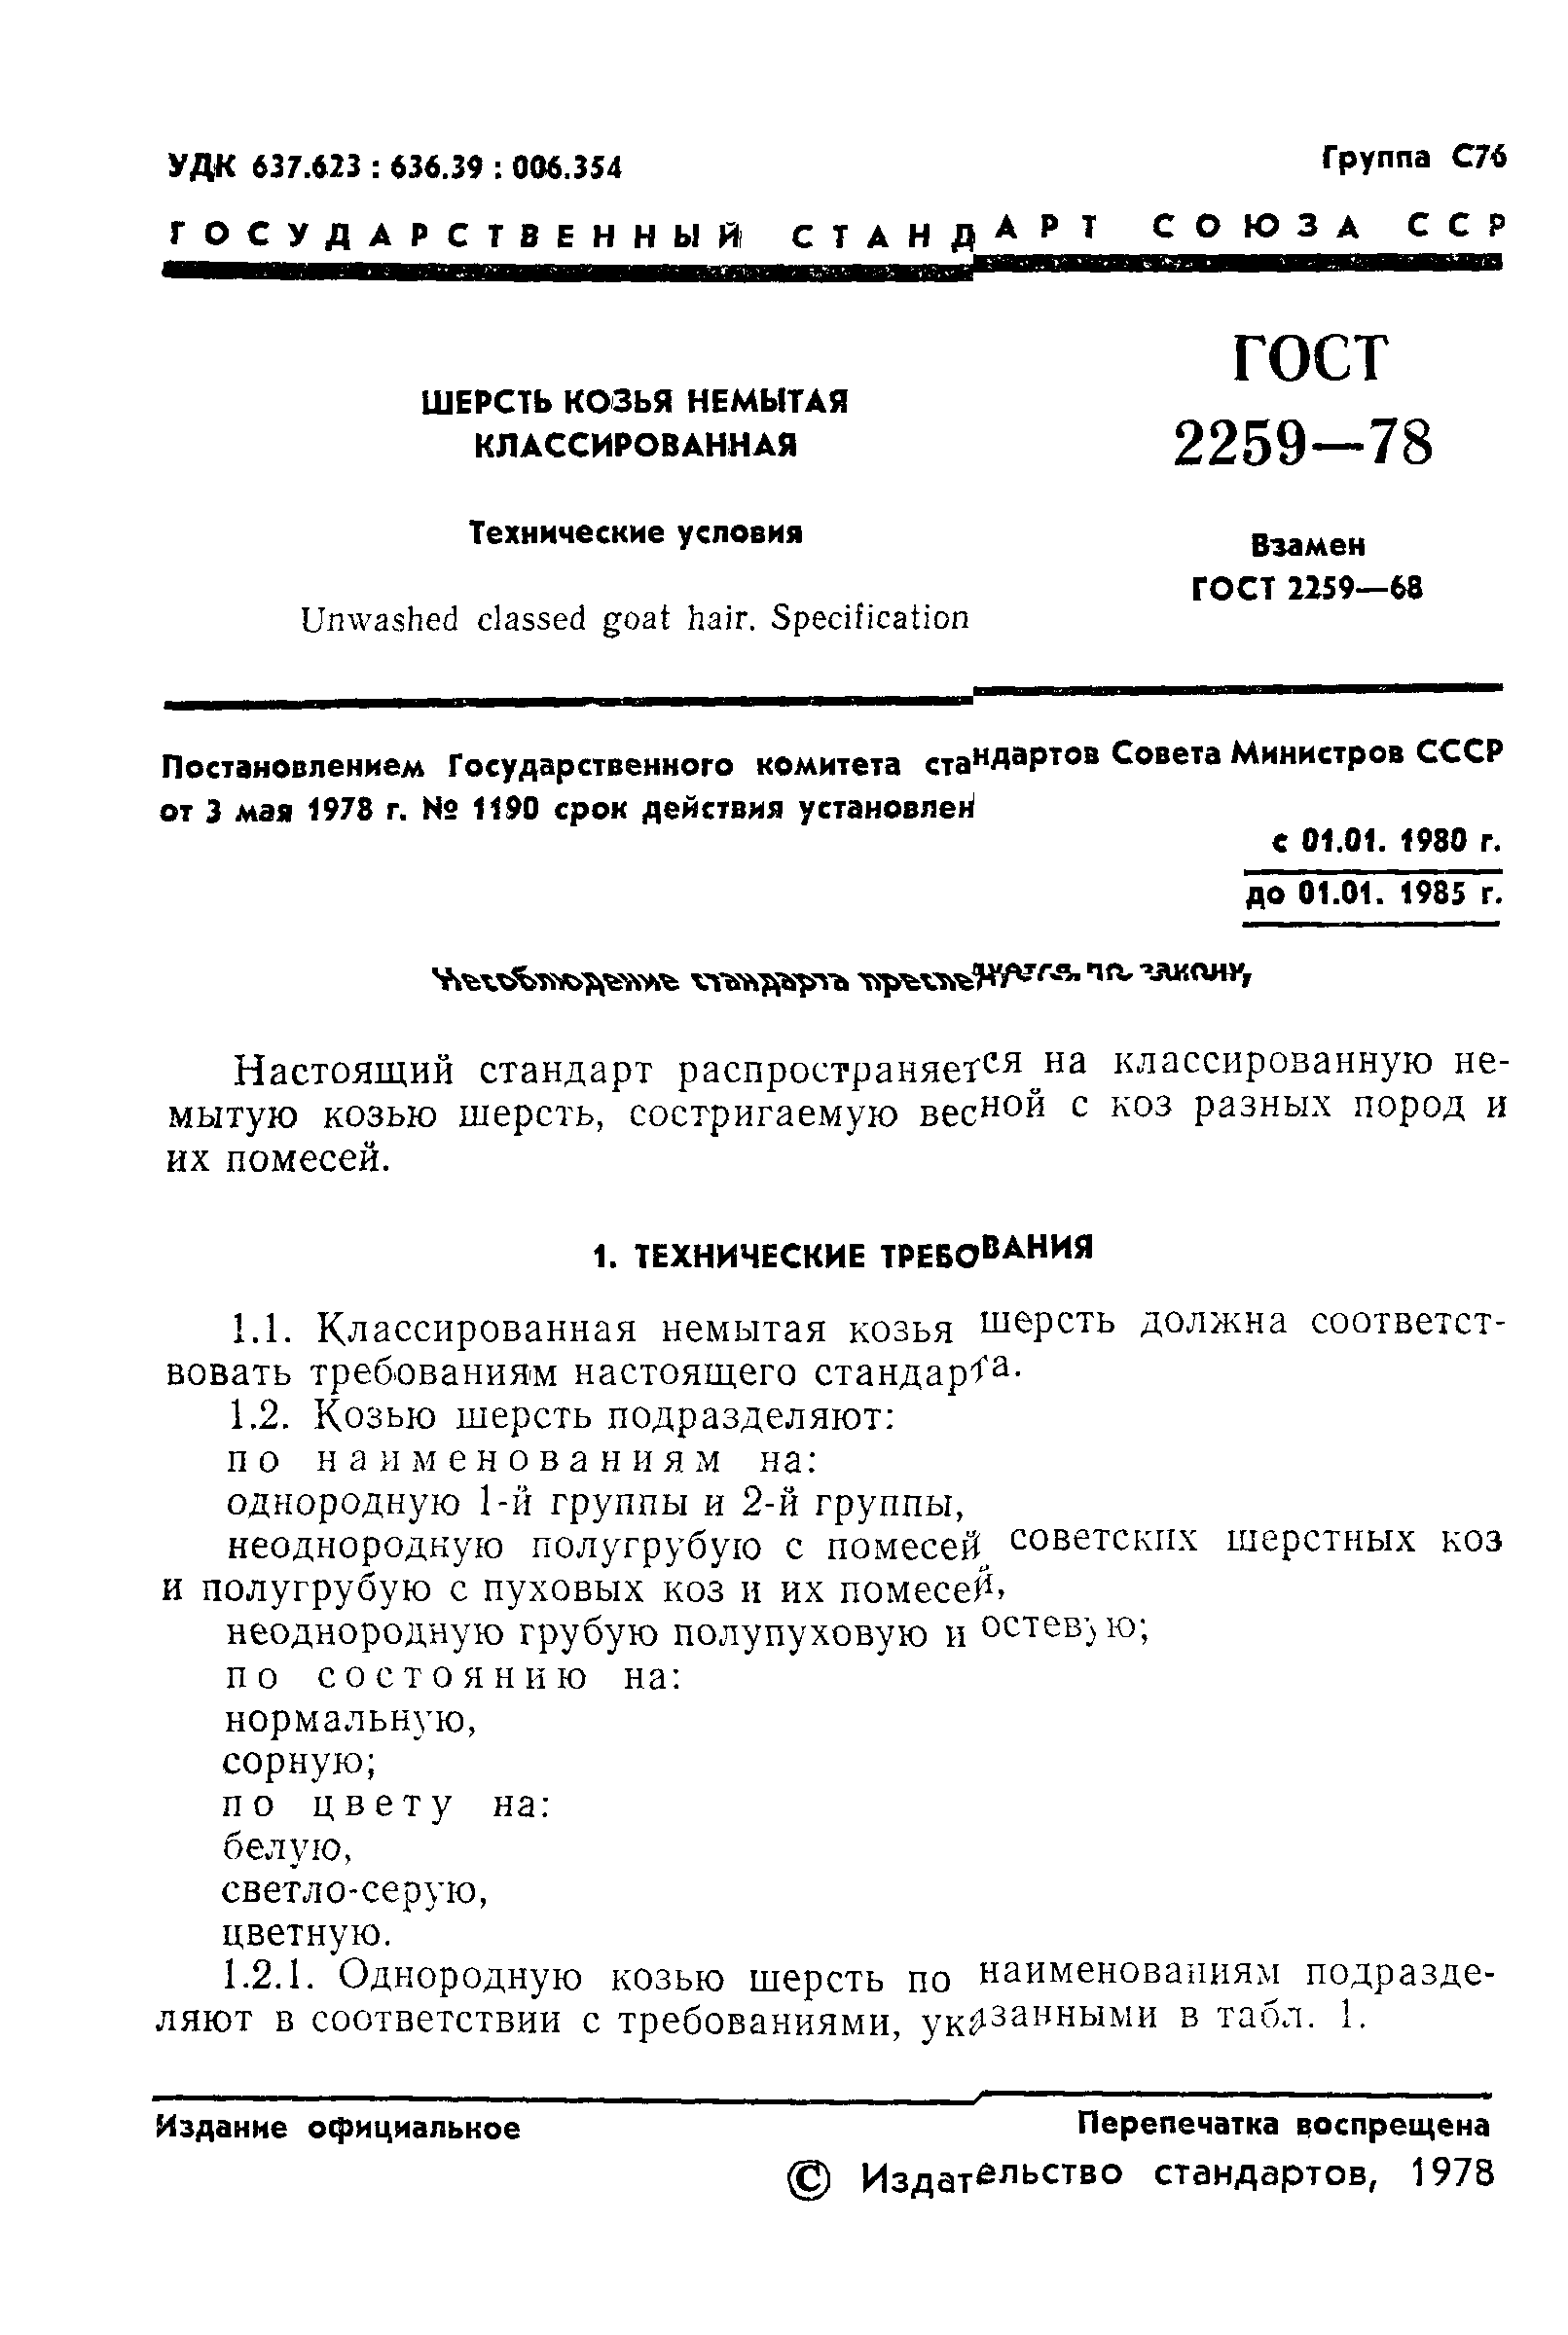 ГОСТ 2259-78